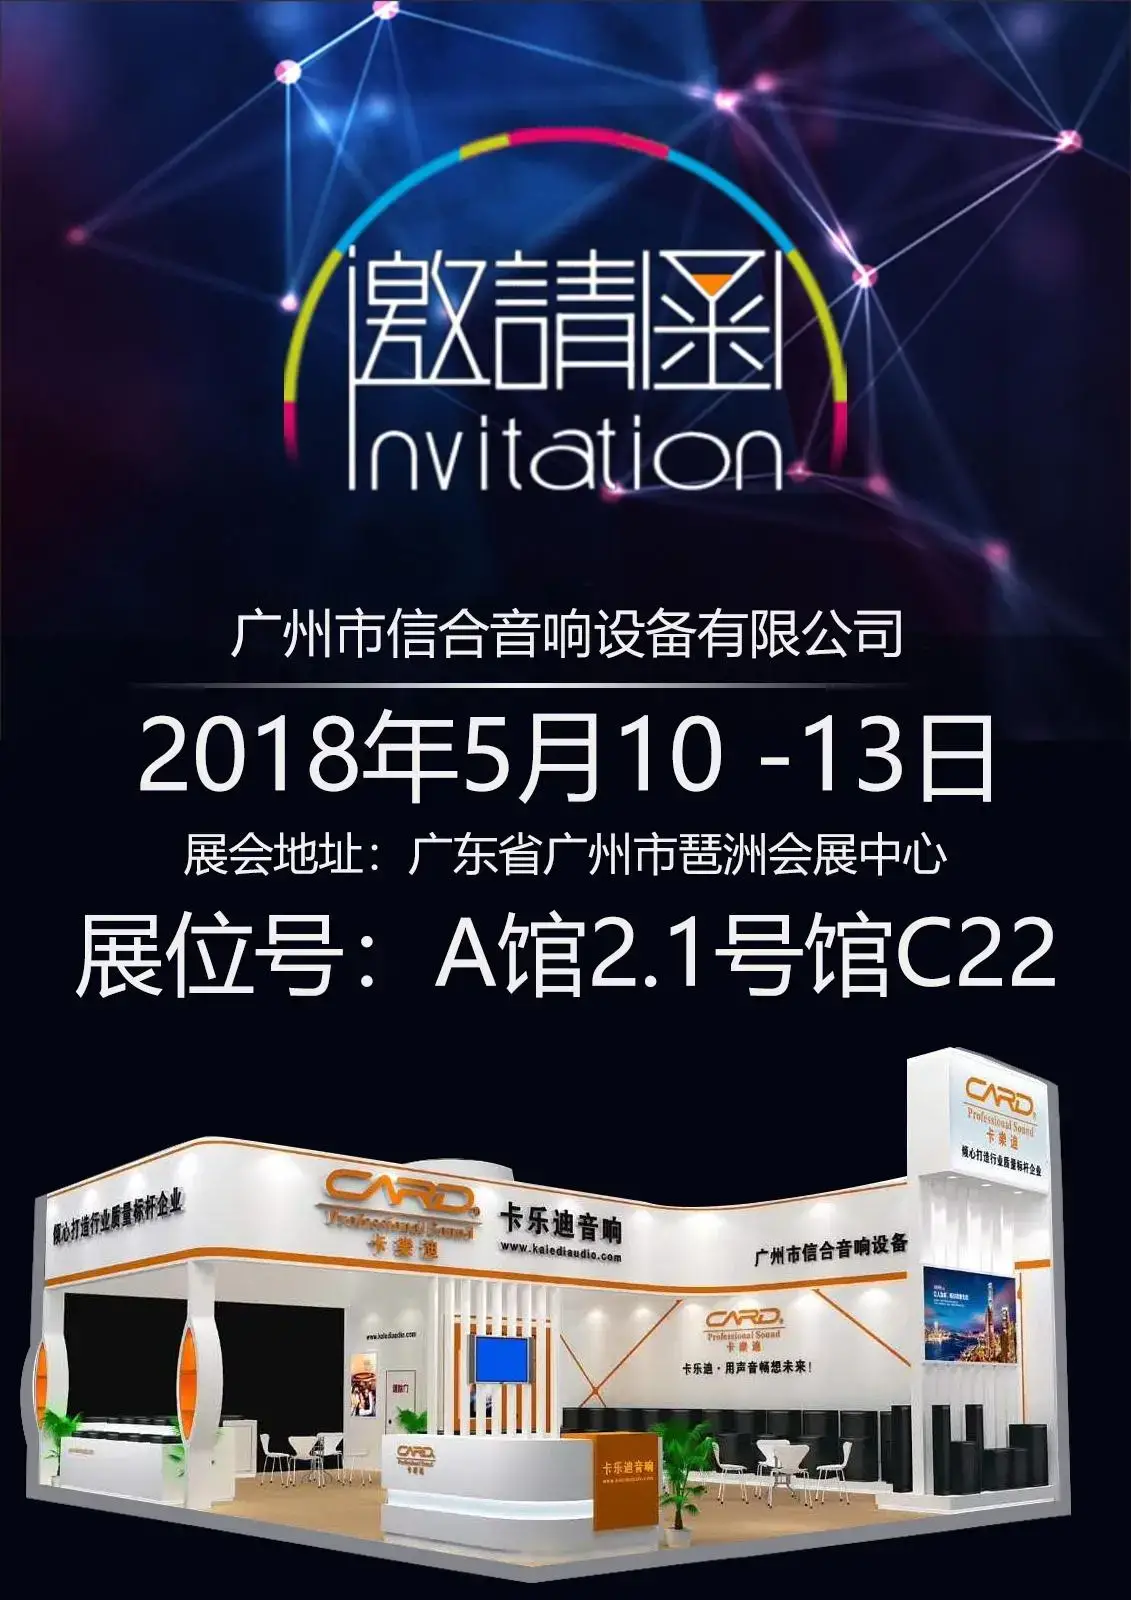 CARDgate2018年广州国际专业音响展览会现场直击